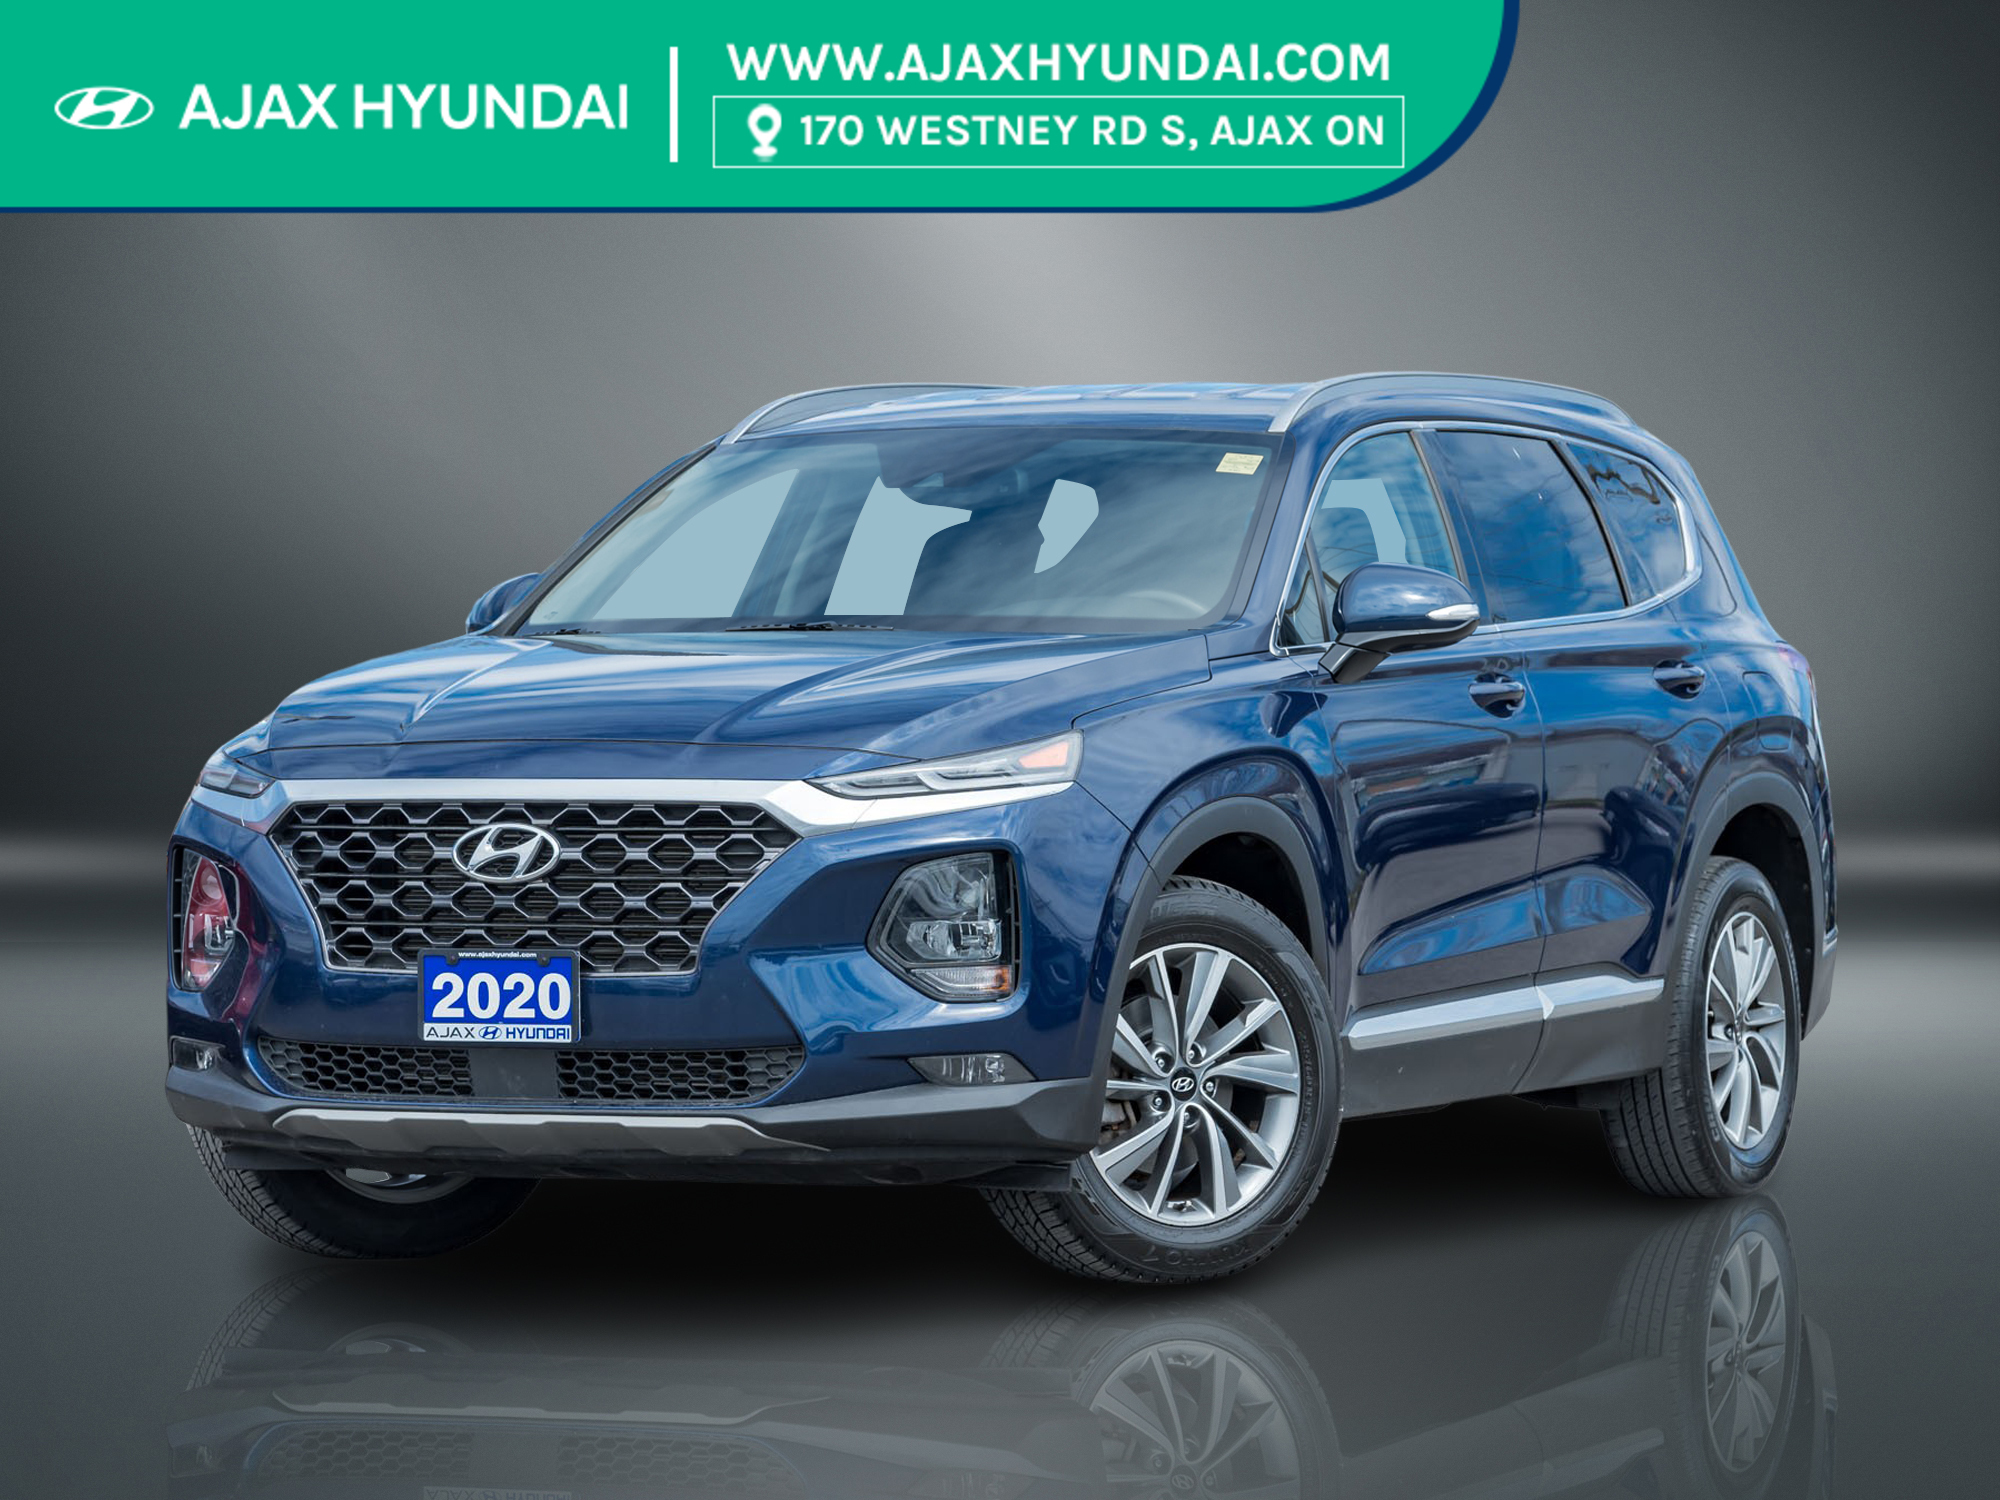 2020 Hyundai Santa Fe ALL WHEEL DRIVE | RATES FROM 4.99%